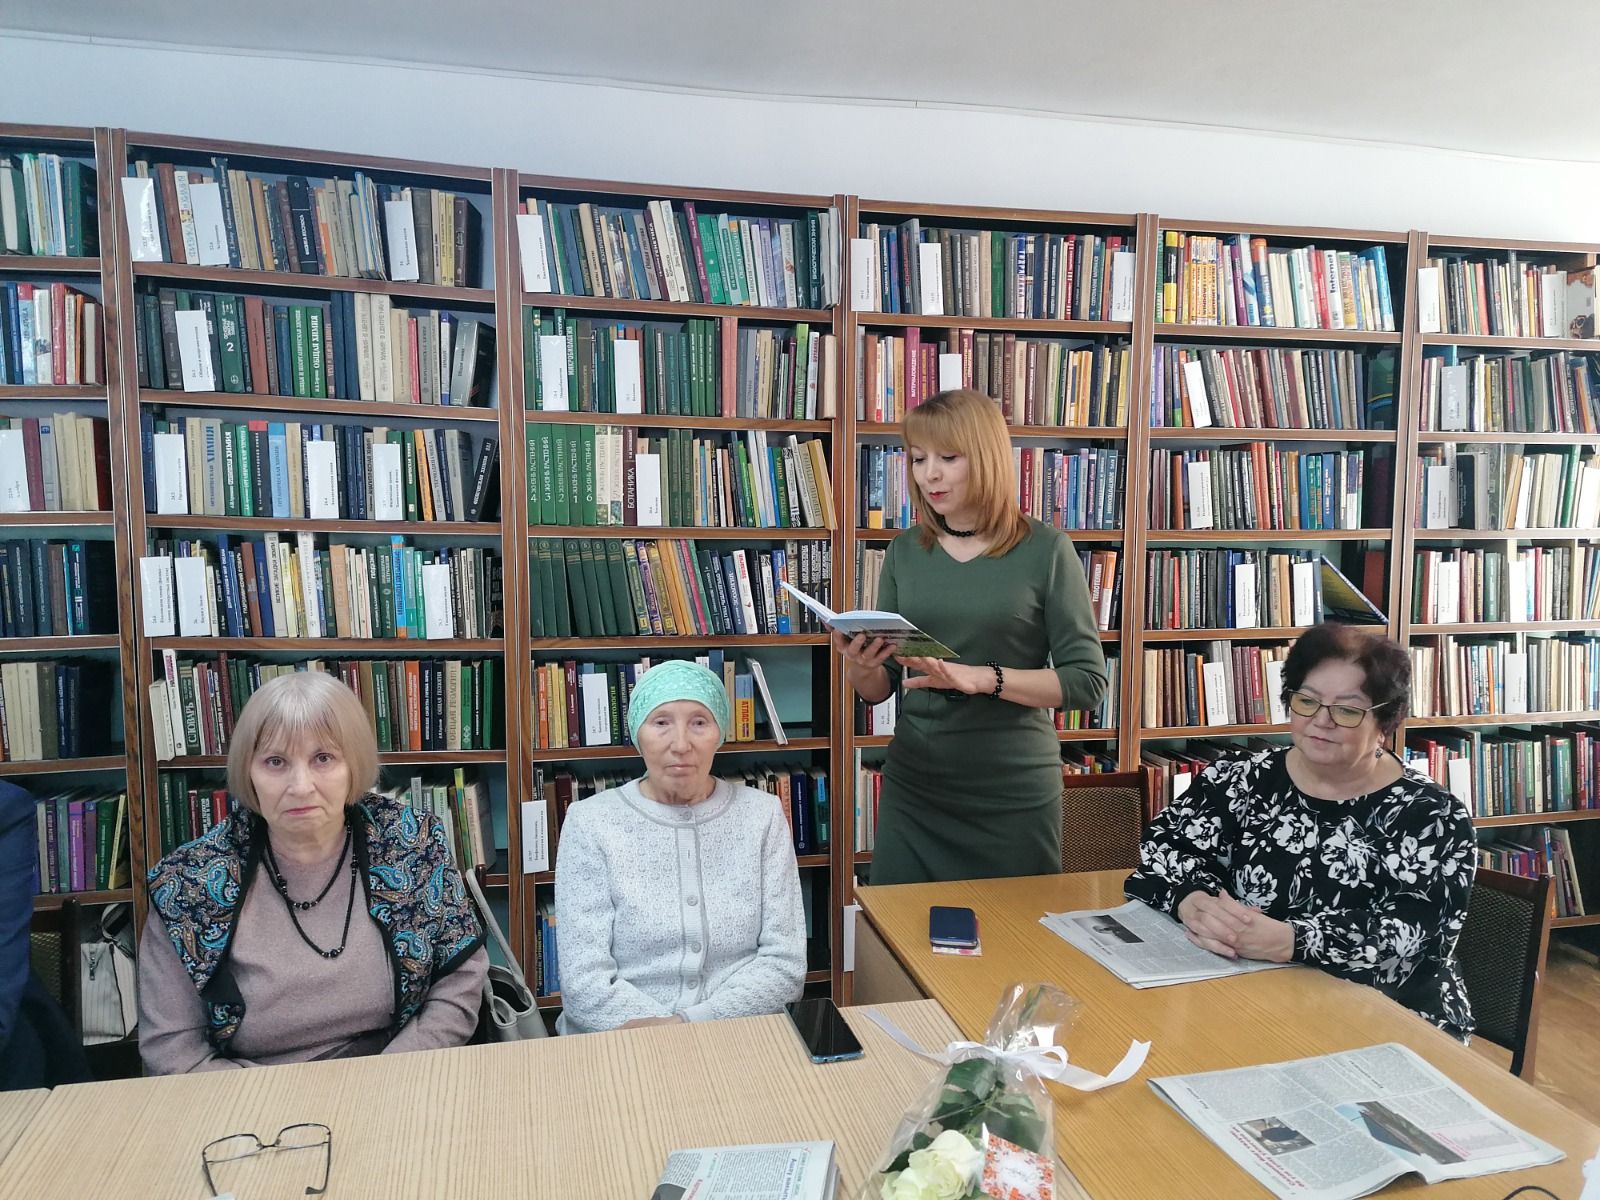 Завгария Шарипова представила землякам свою новую книгу